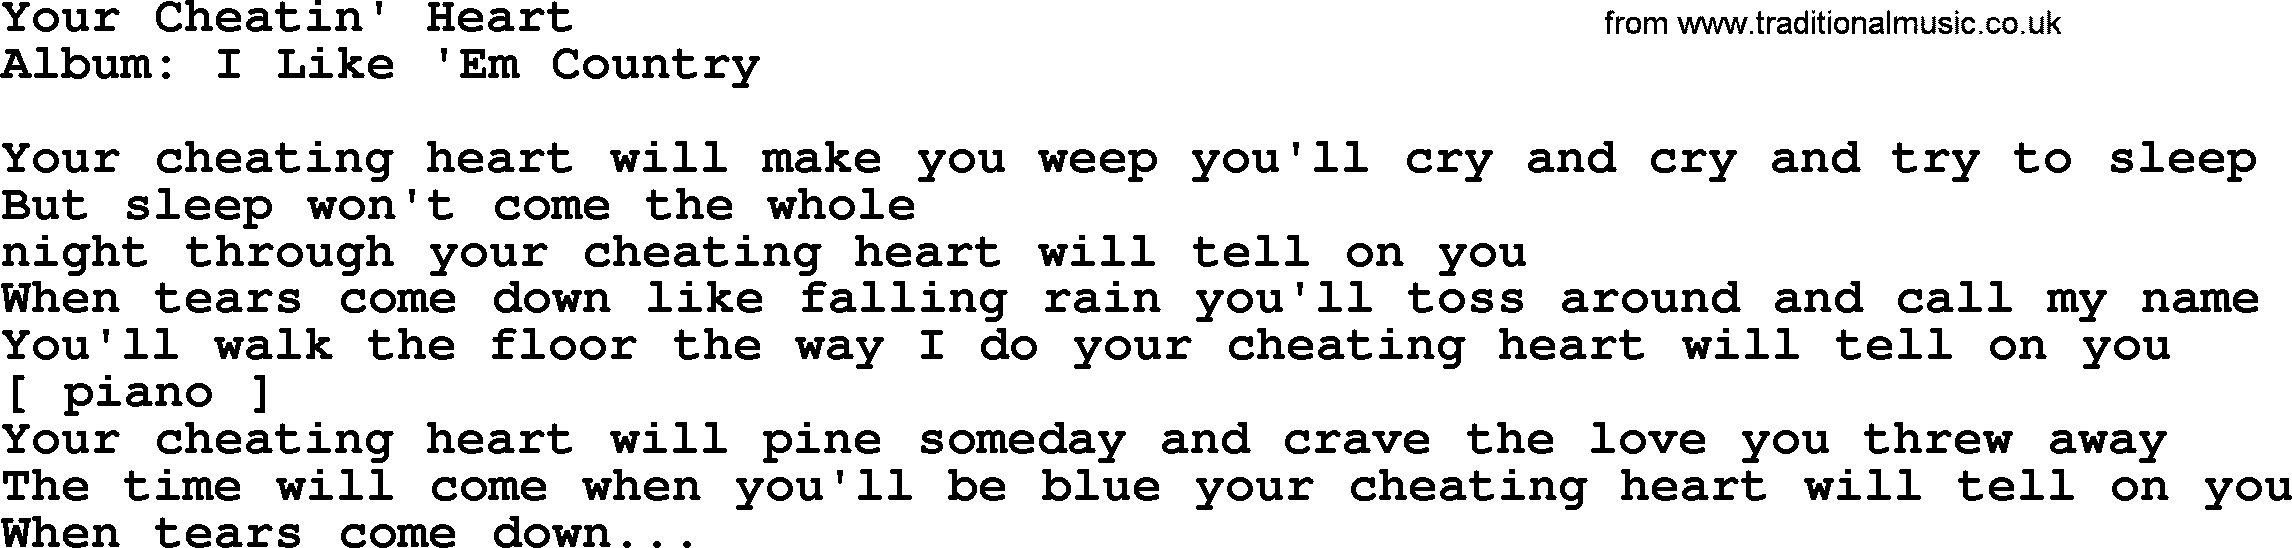 Loretta Lynn song: Your Cheatin' Heart lyrics